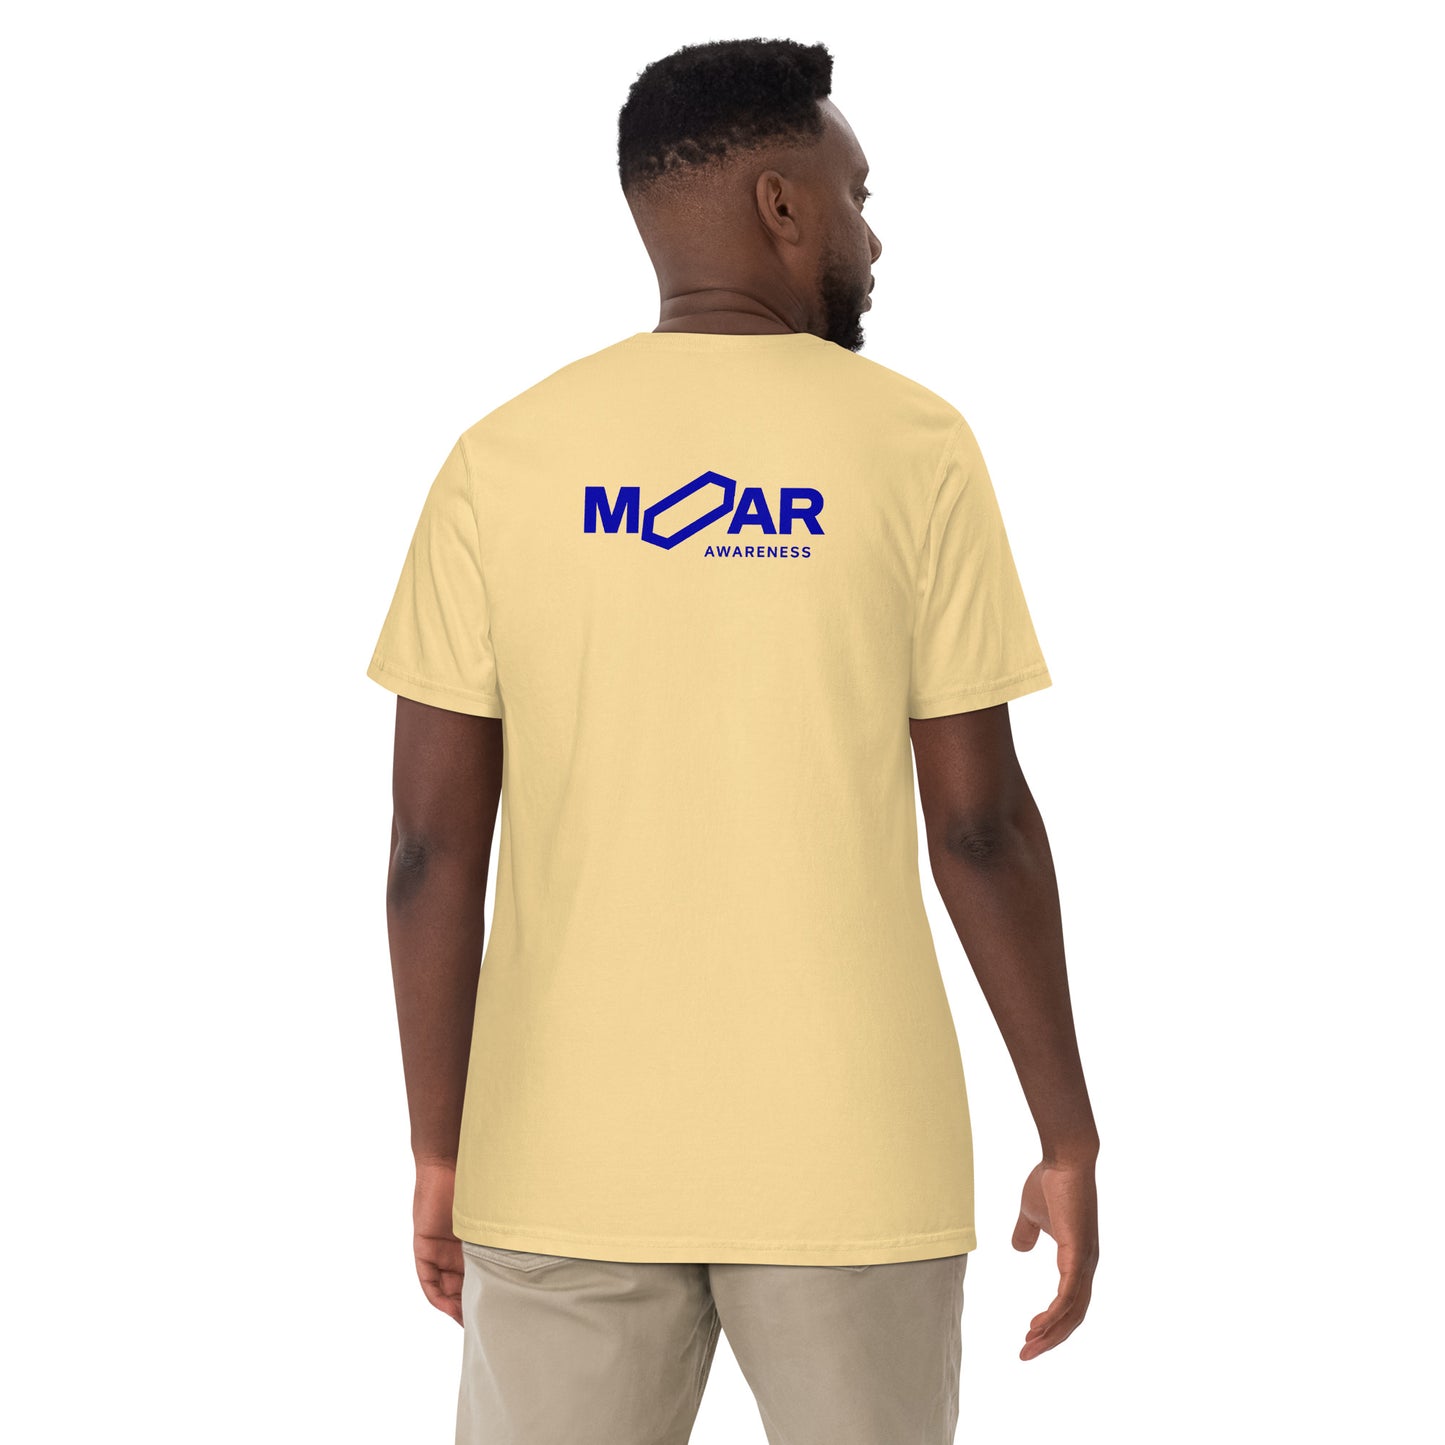 Crypto HODL Shirt | Men's T-shirt & Apparel | Crypto Casey Clothing